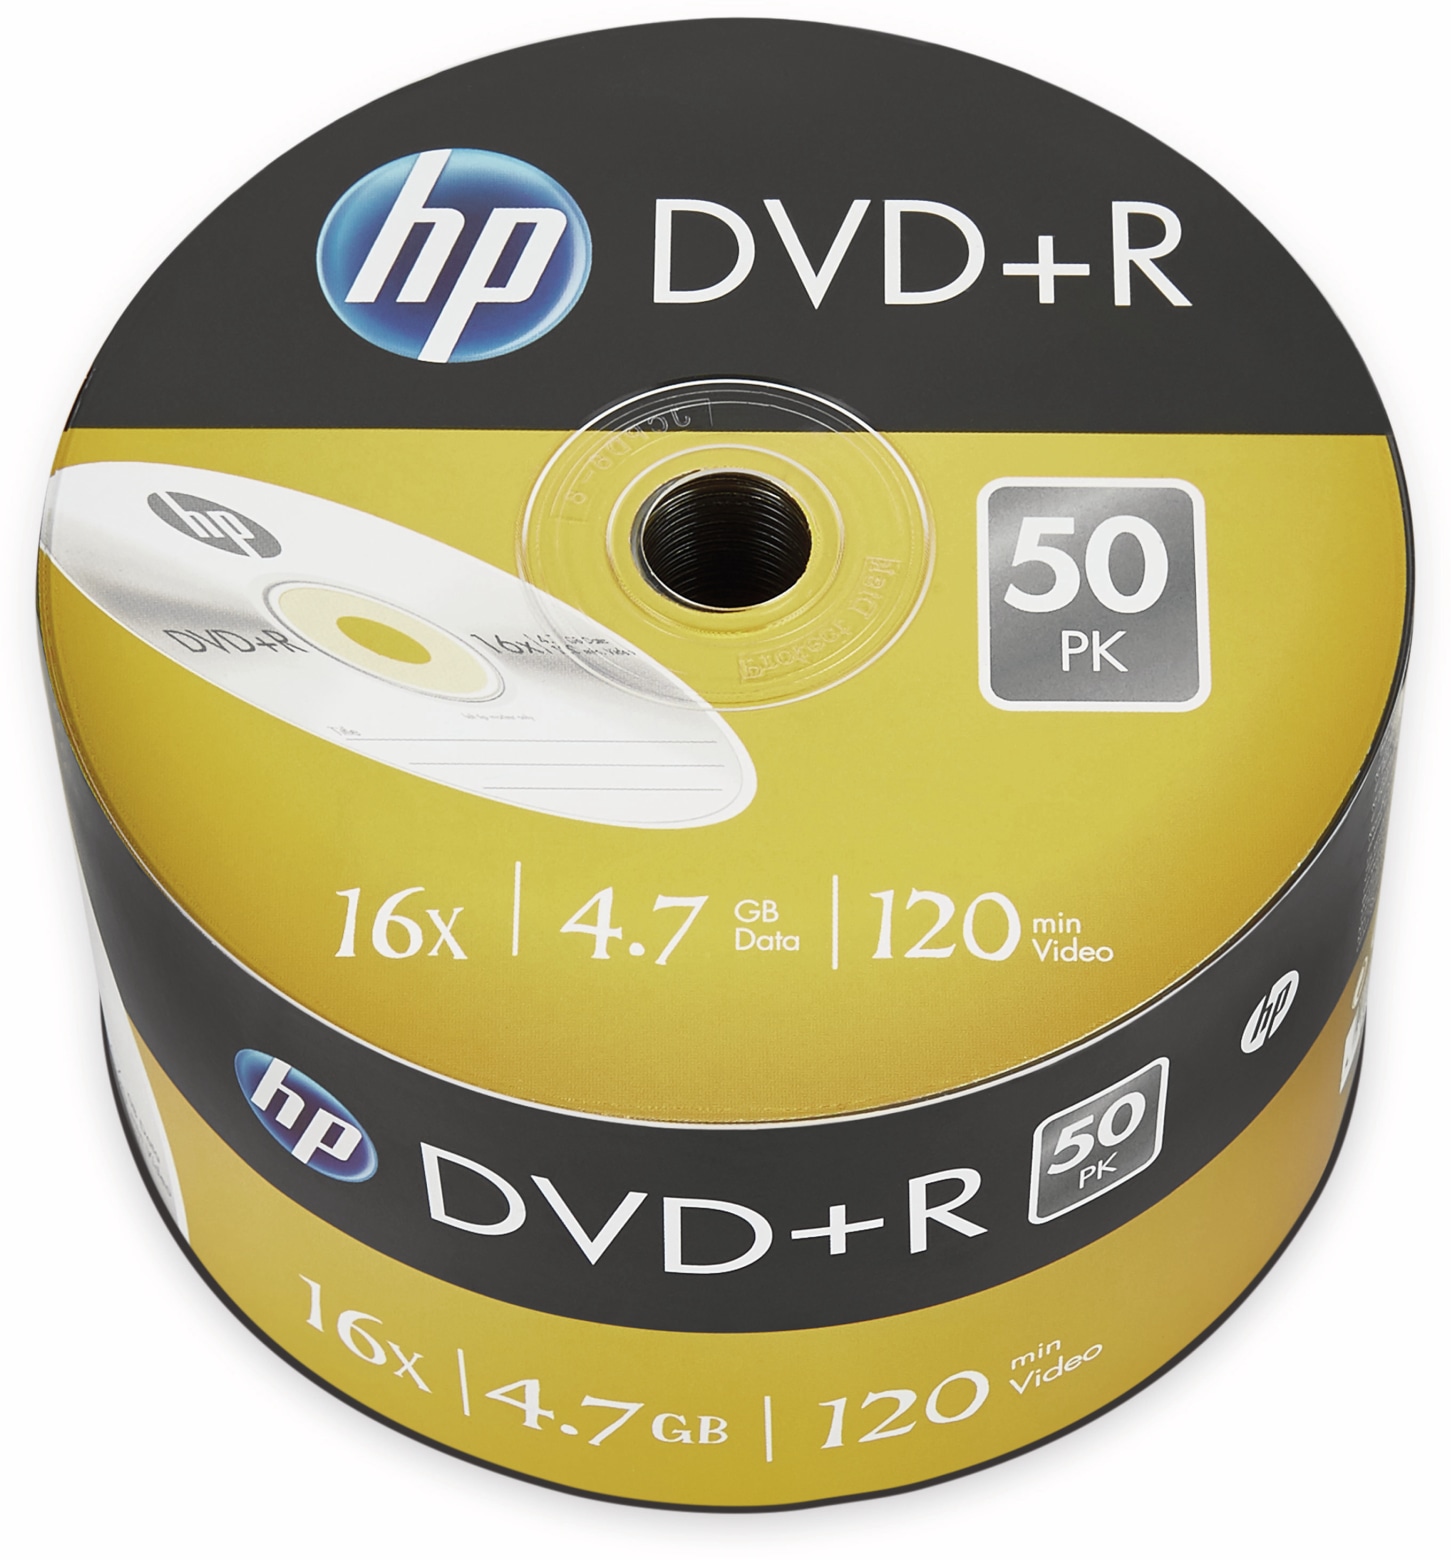 HP DVD+R 4.7GB, 120Min, 16x, Bulk-Pack, 50 CDs